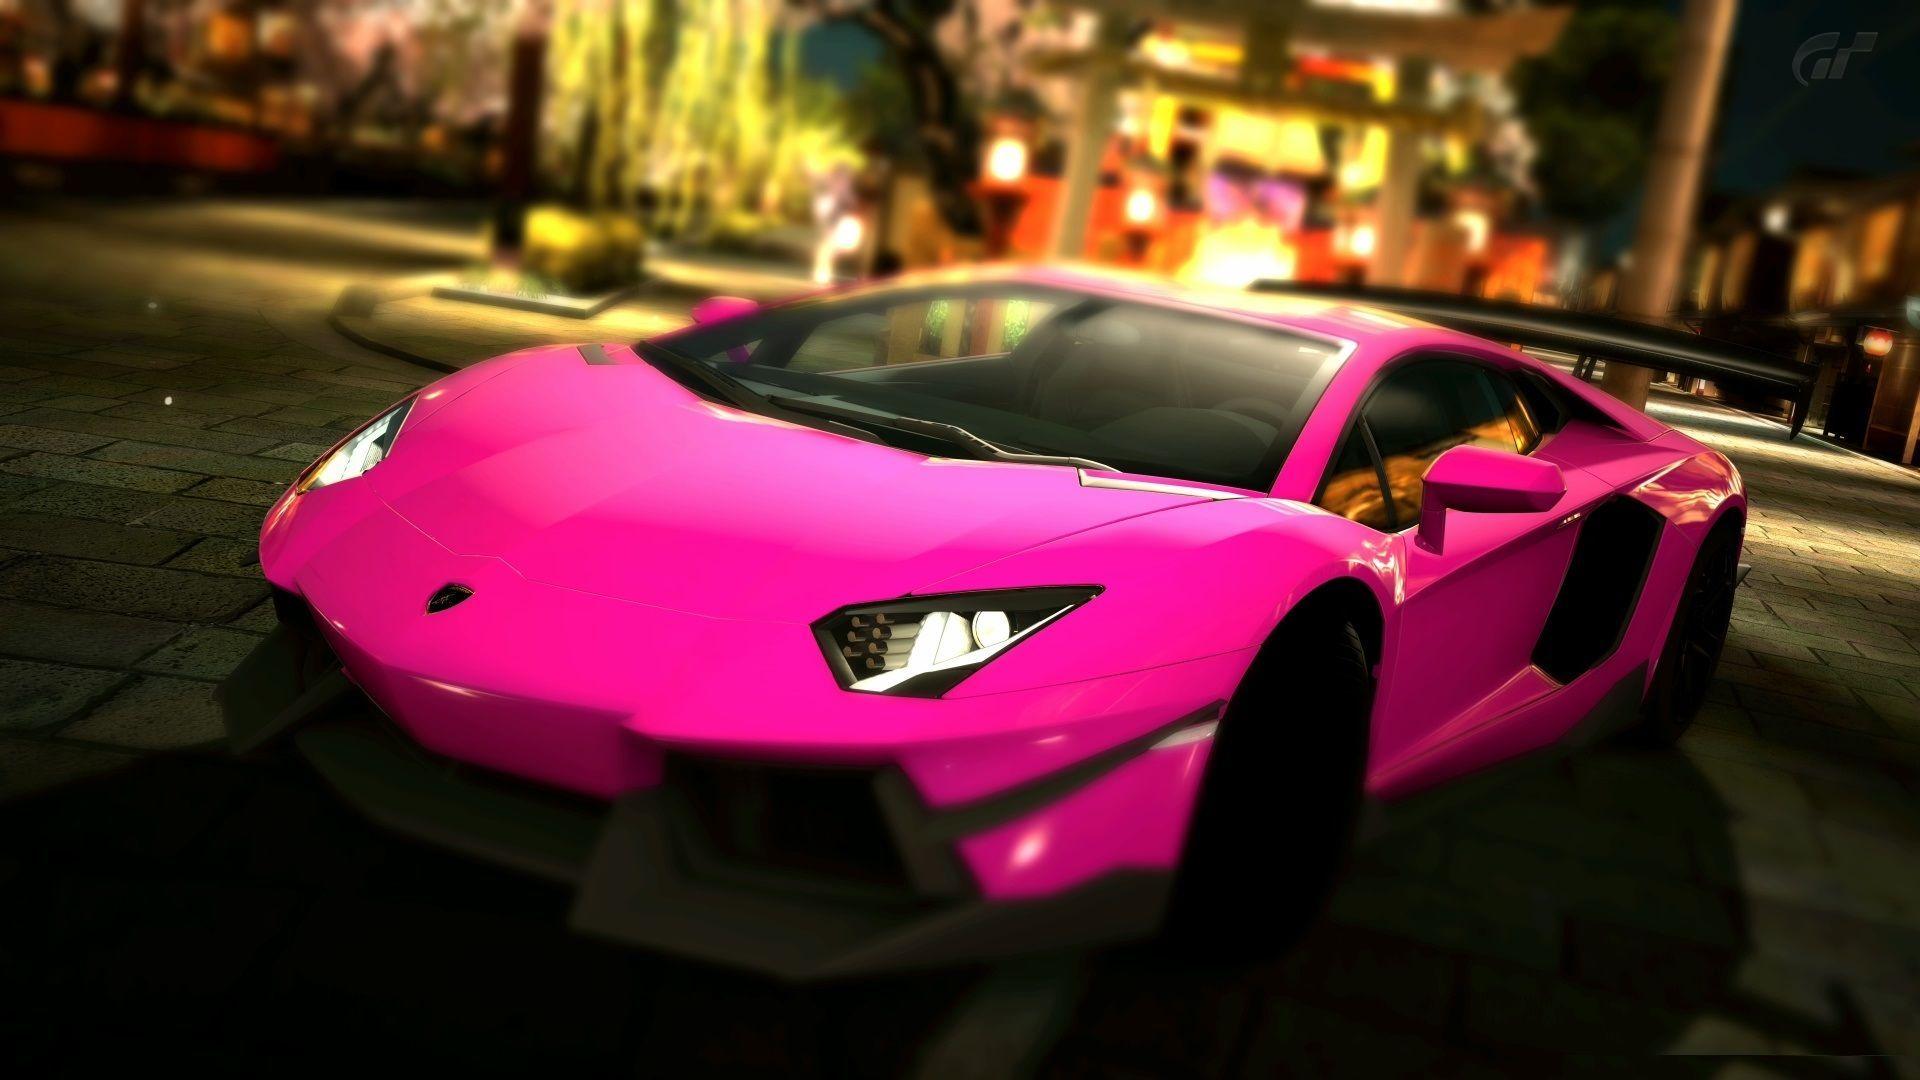 Lamborghini Lamborghini Aventador pink color model car wallpaper